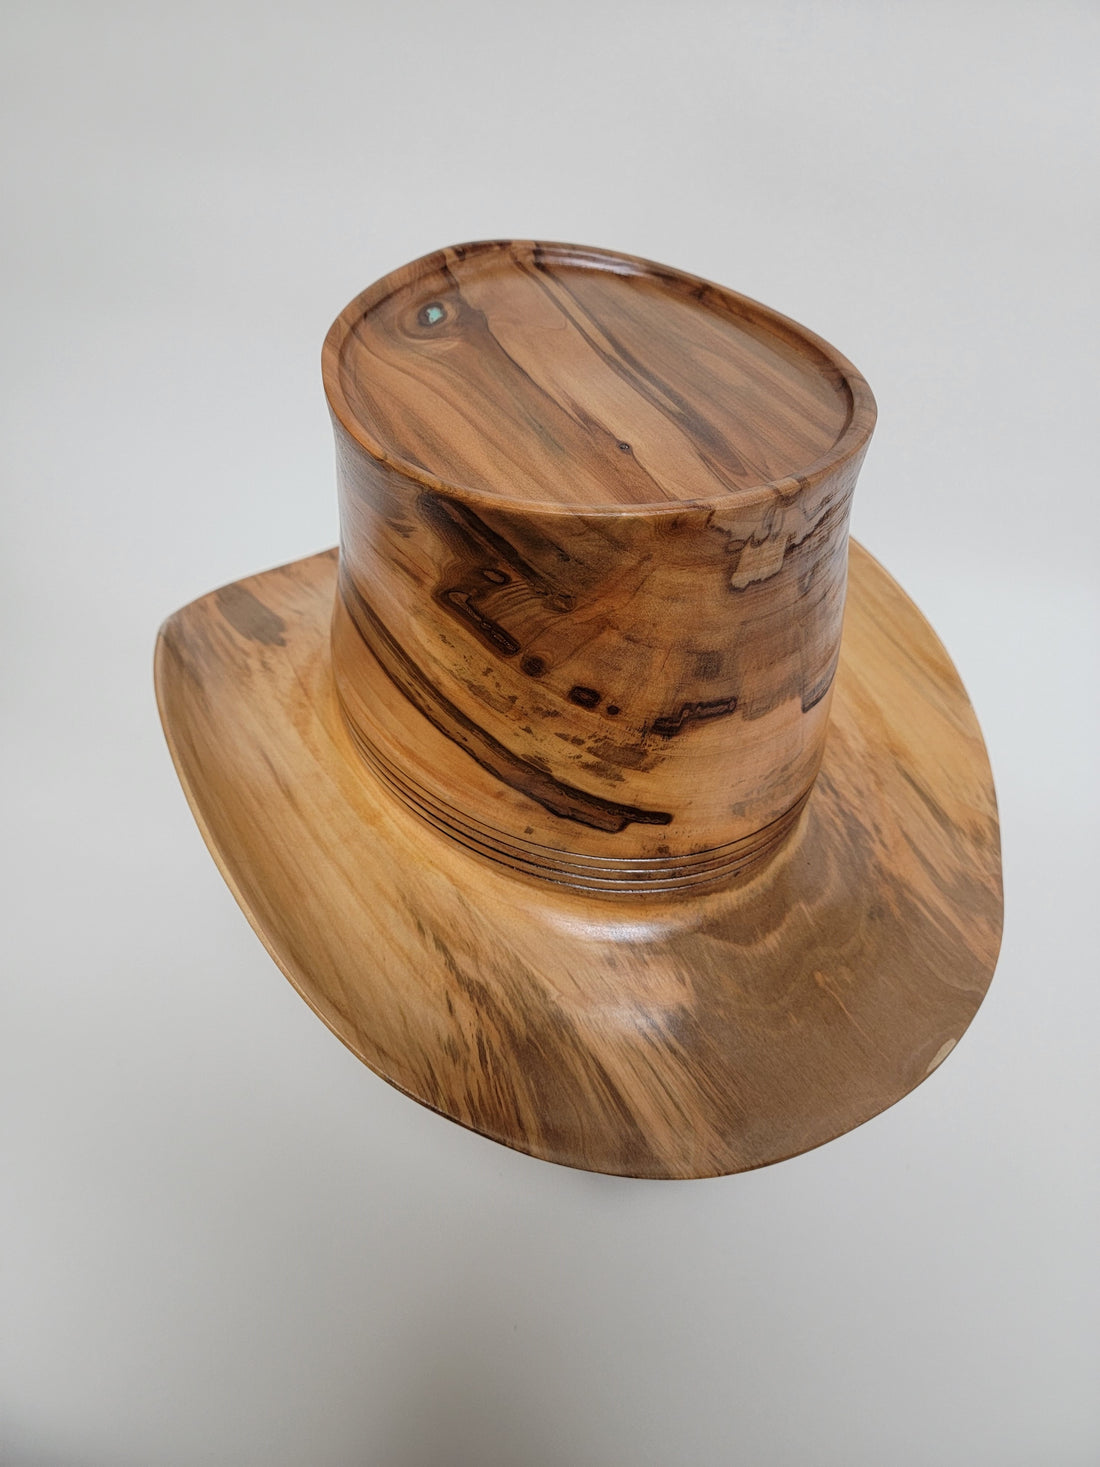 Sweetgum Cowboy Hat - Rare Wood Turned Men's Headwear #305| Personal ...